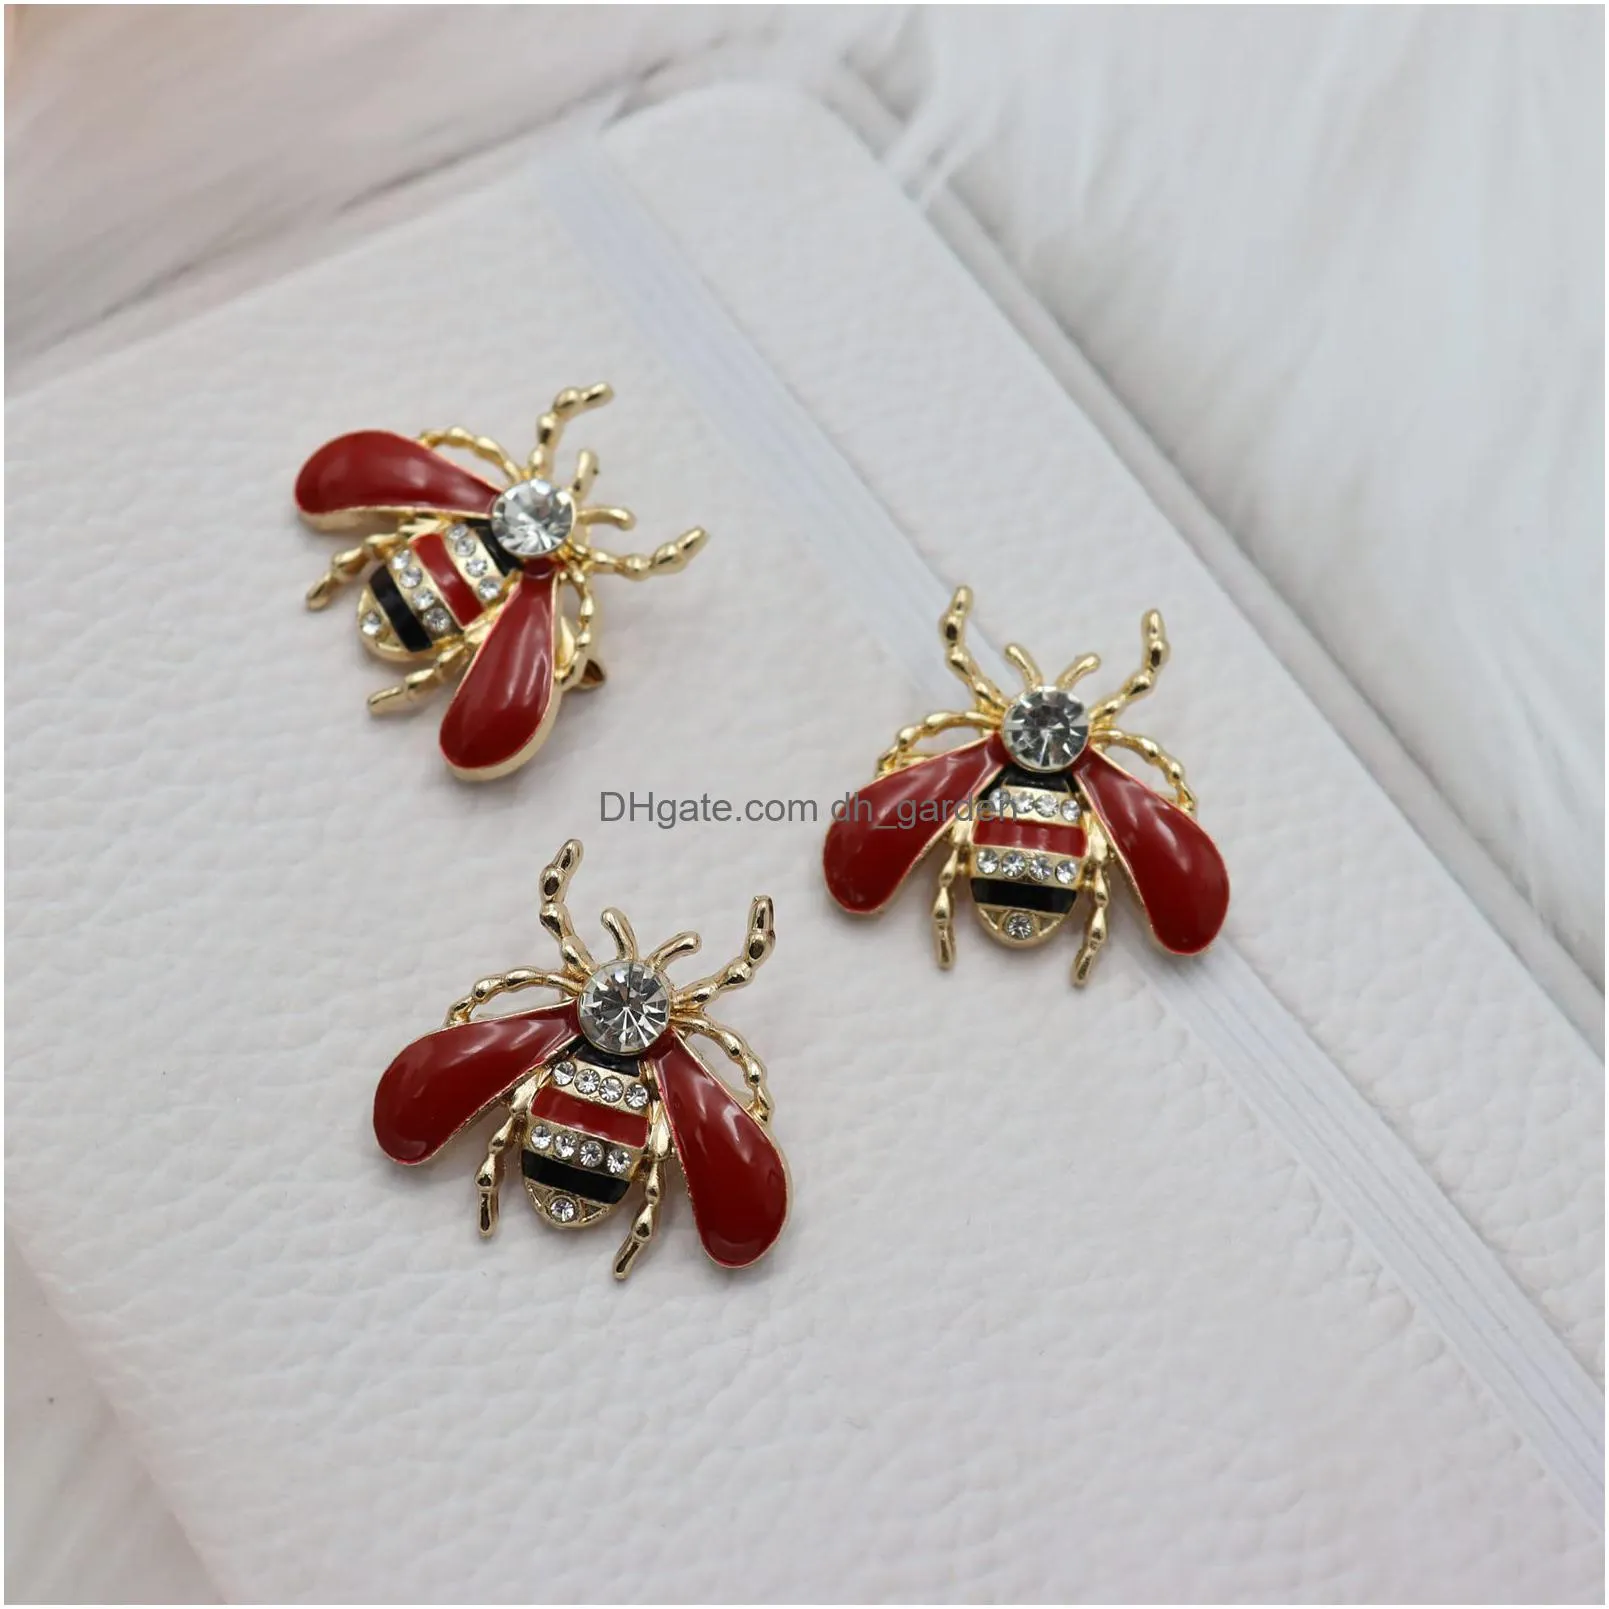 mlepus bee brooch pin cute animal insect enamel rhinestone safety pin women fashion personality lapel pin ladies costume jewelry